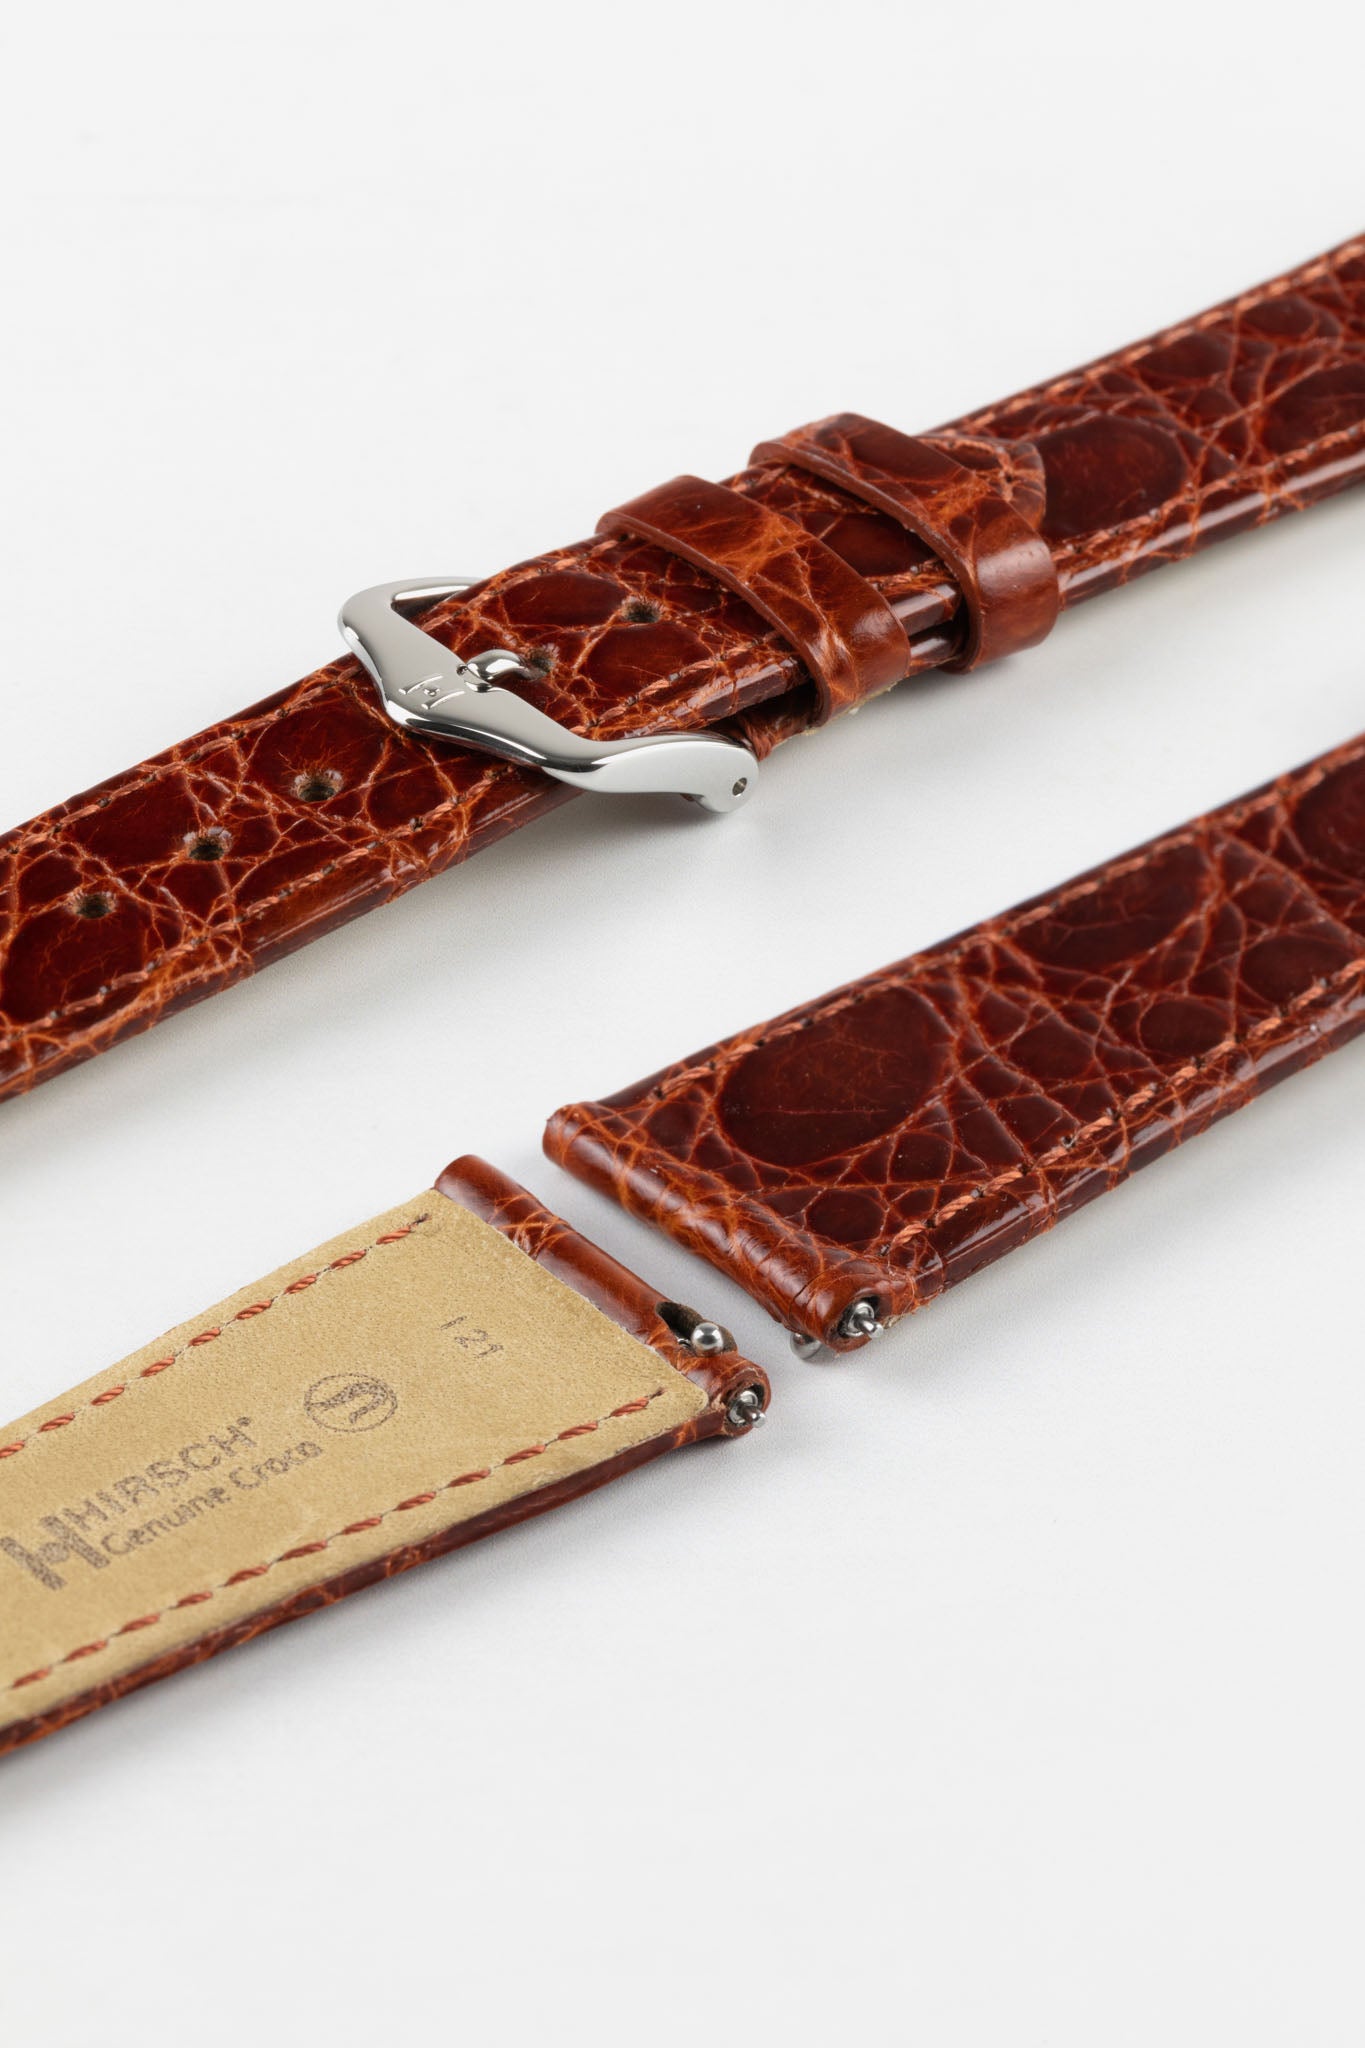 Crocodile leather -  - The Leather